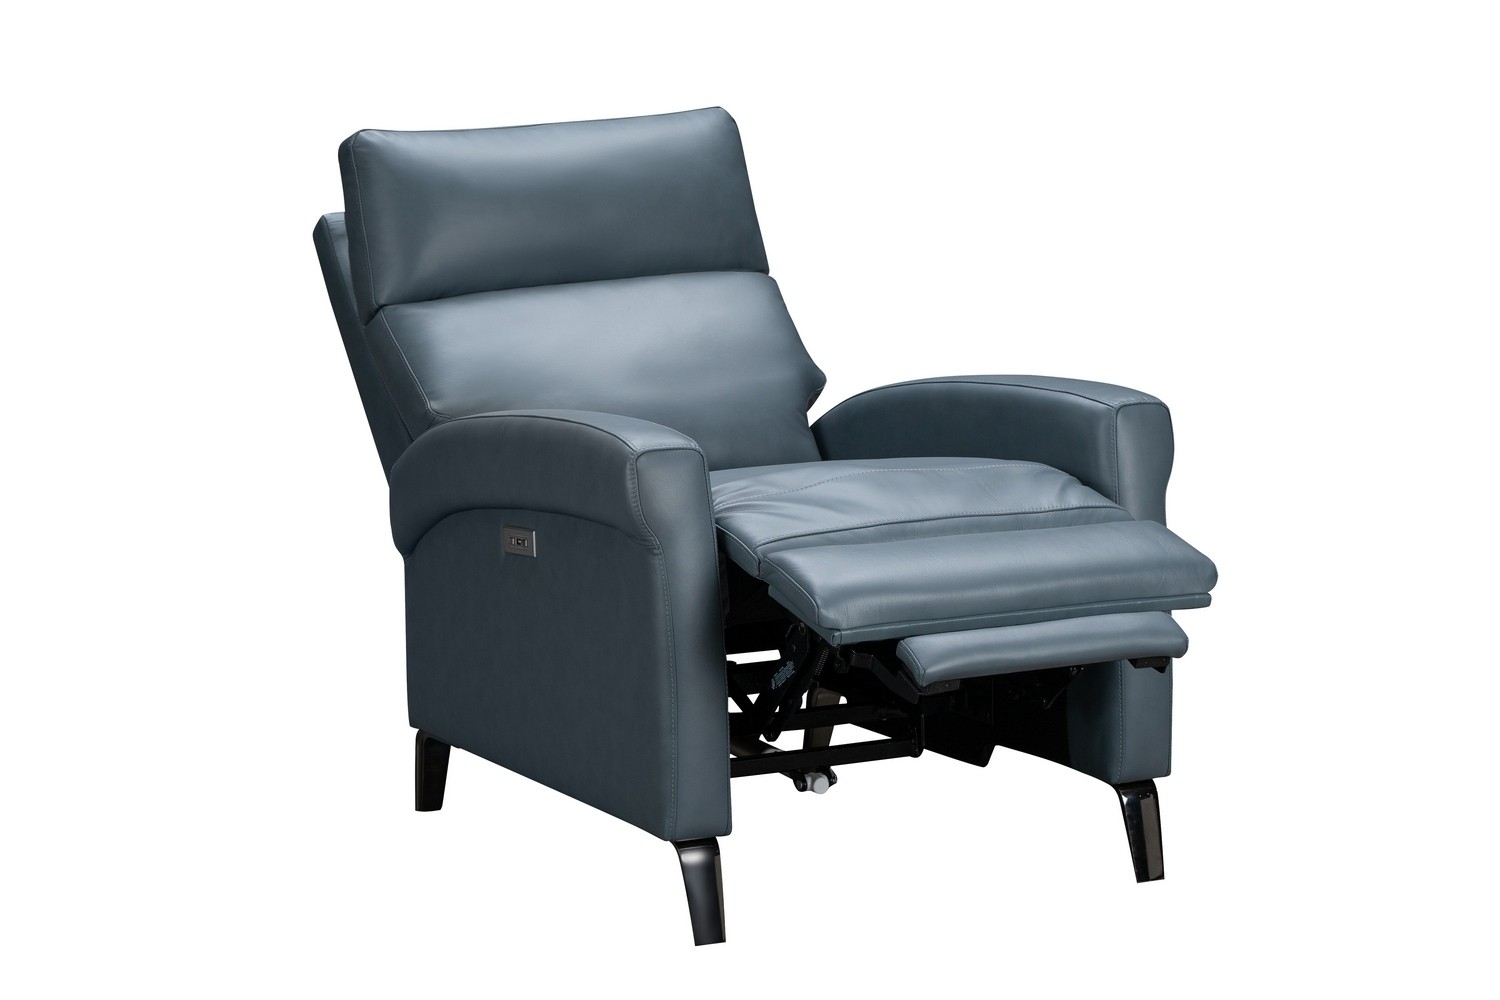 Barcalounger Simon Power Recliner Chair with Power Head Rest - Masen Bluegray/Leather Match